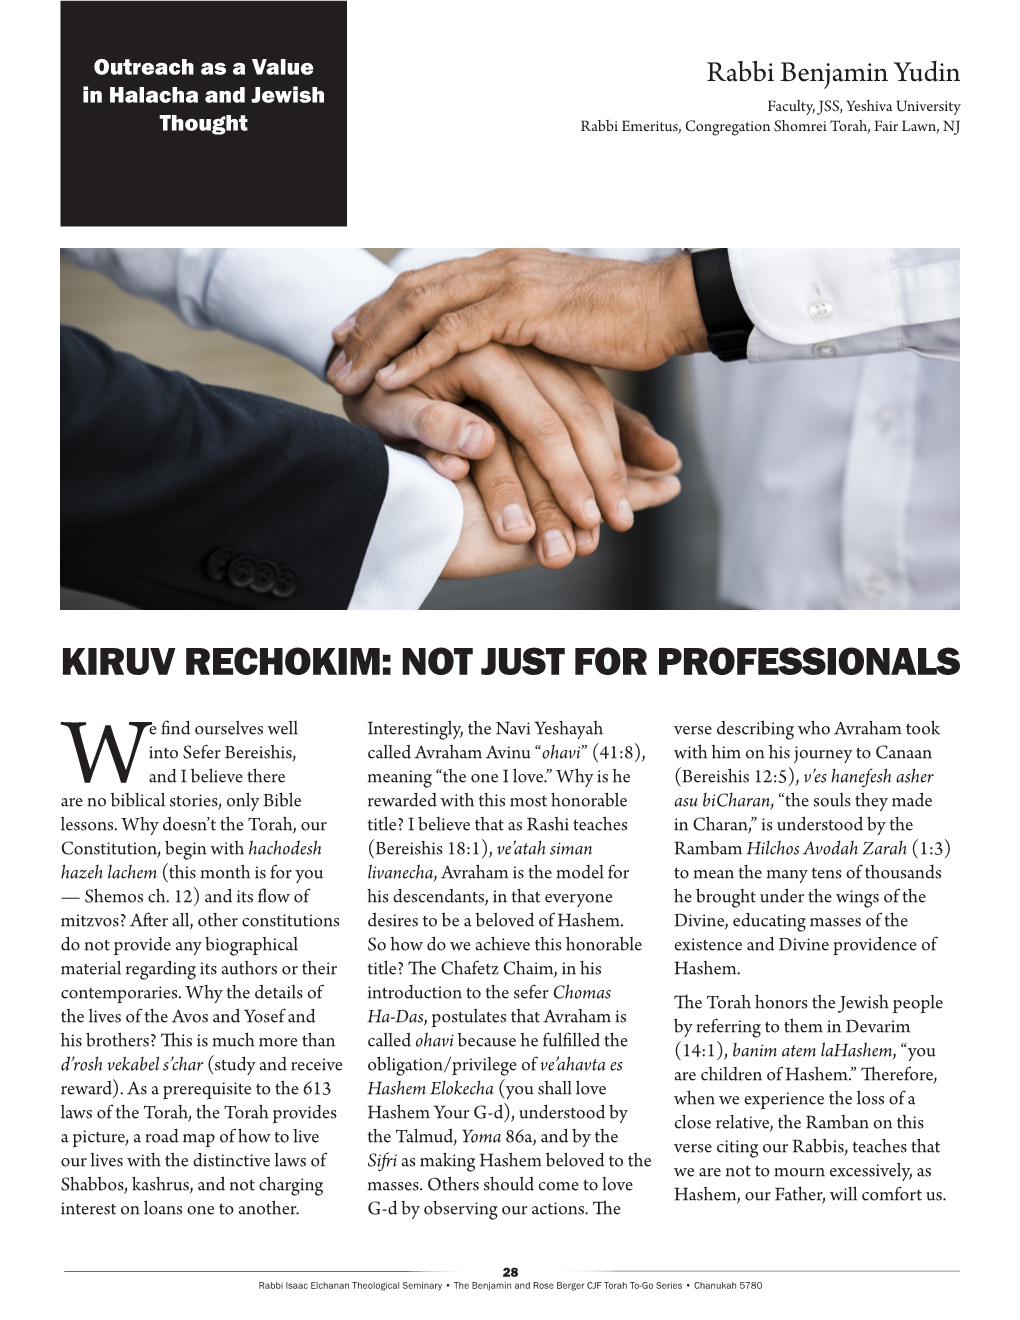 Kiruv Rechokim: Not Just for Professionals